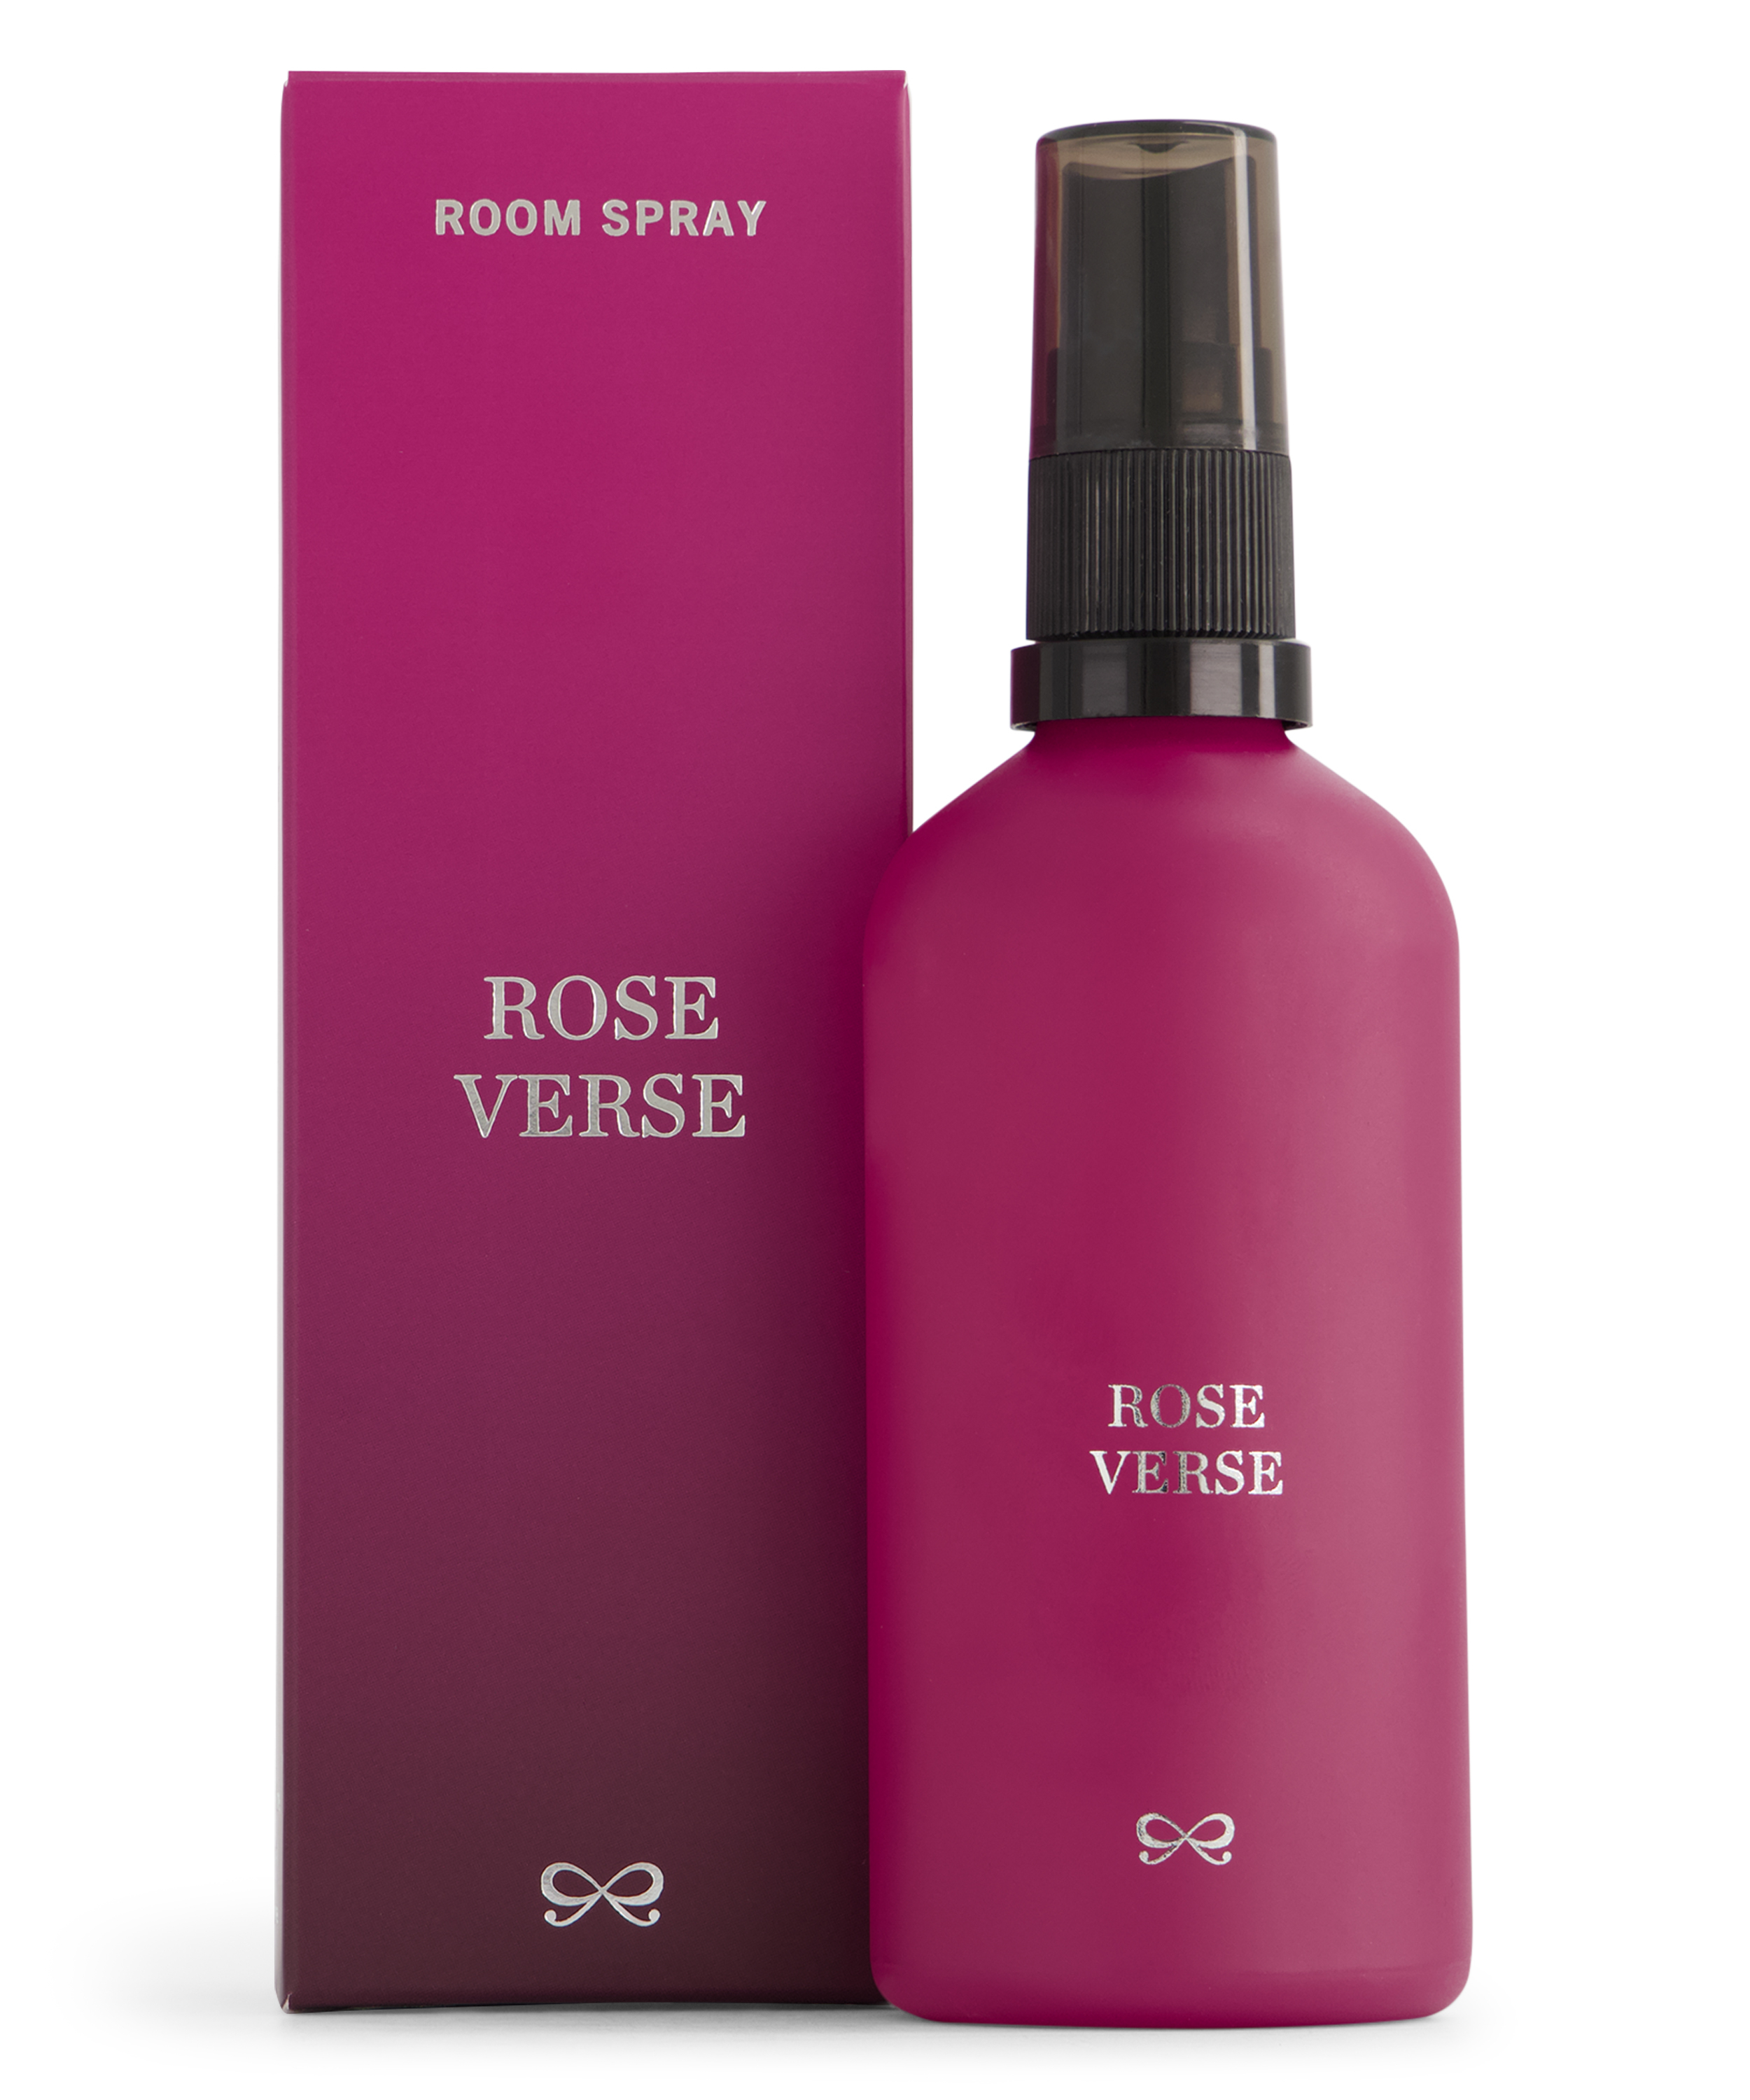 Room Spray Rose Verse 100ml, Pink, main